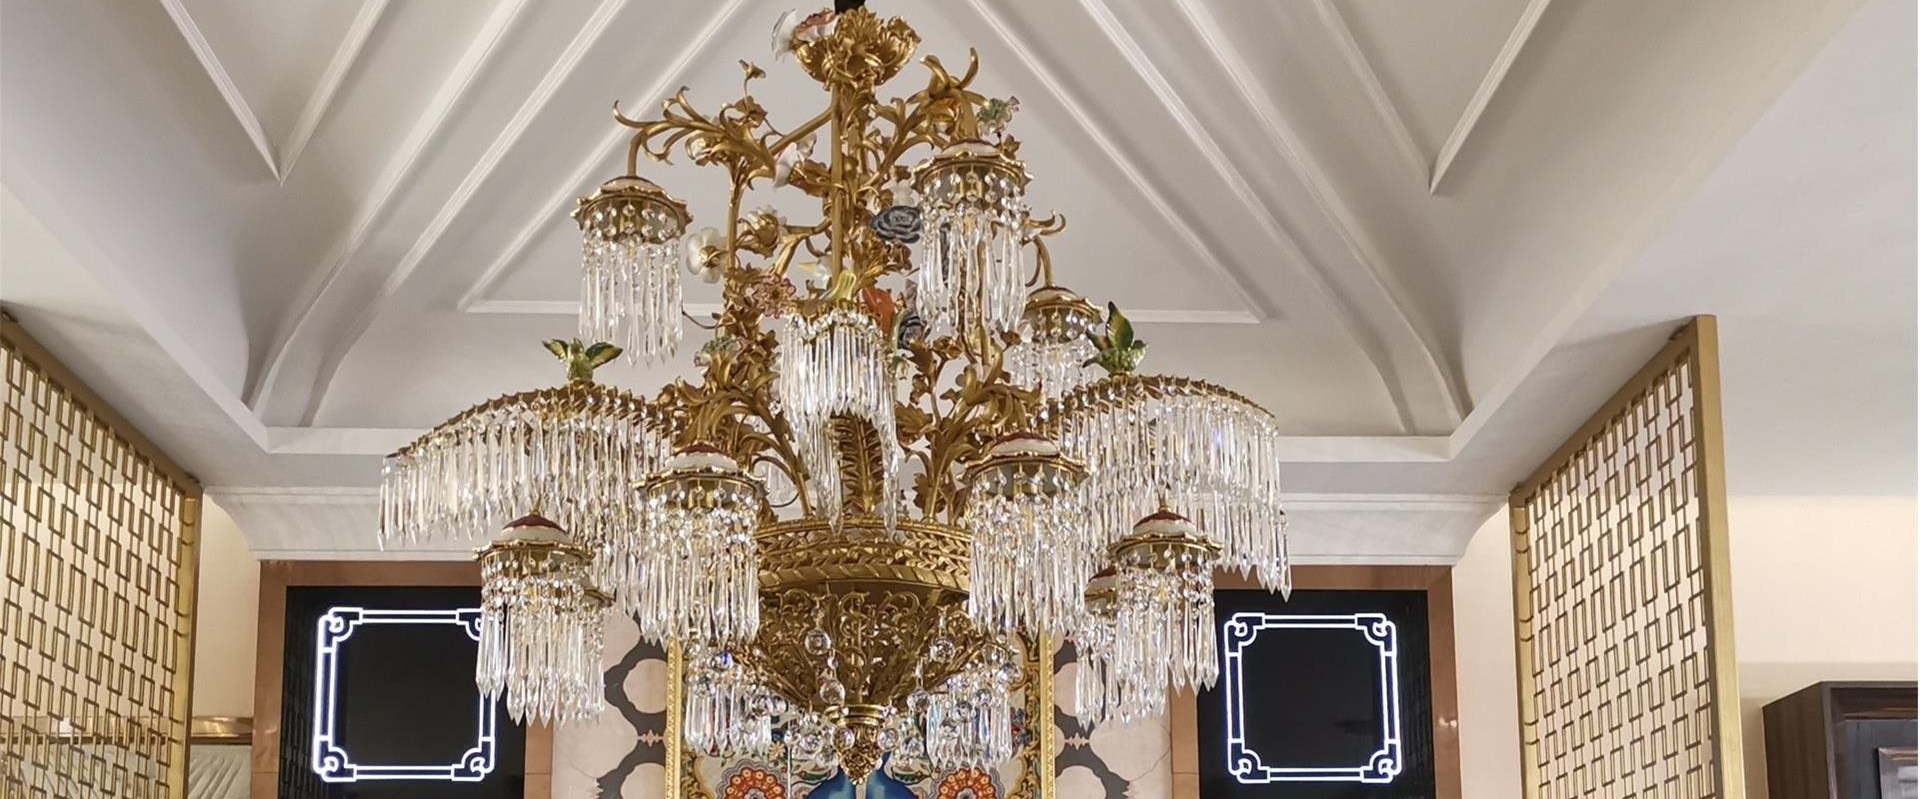 DUTTI LED Brass Chandelier Bronze Chandeliers Antique Modern Lighting Fixtures Best Price